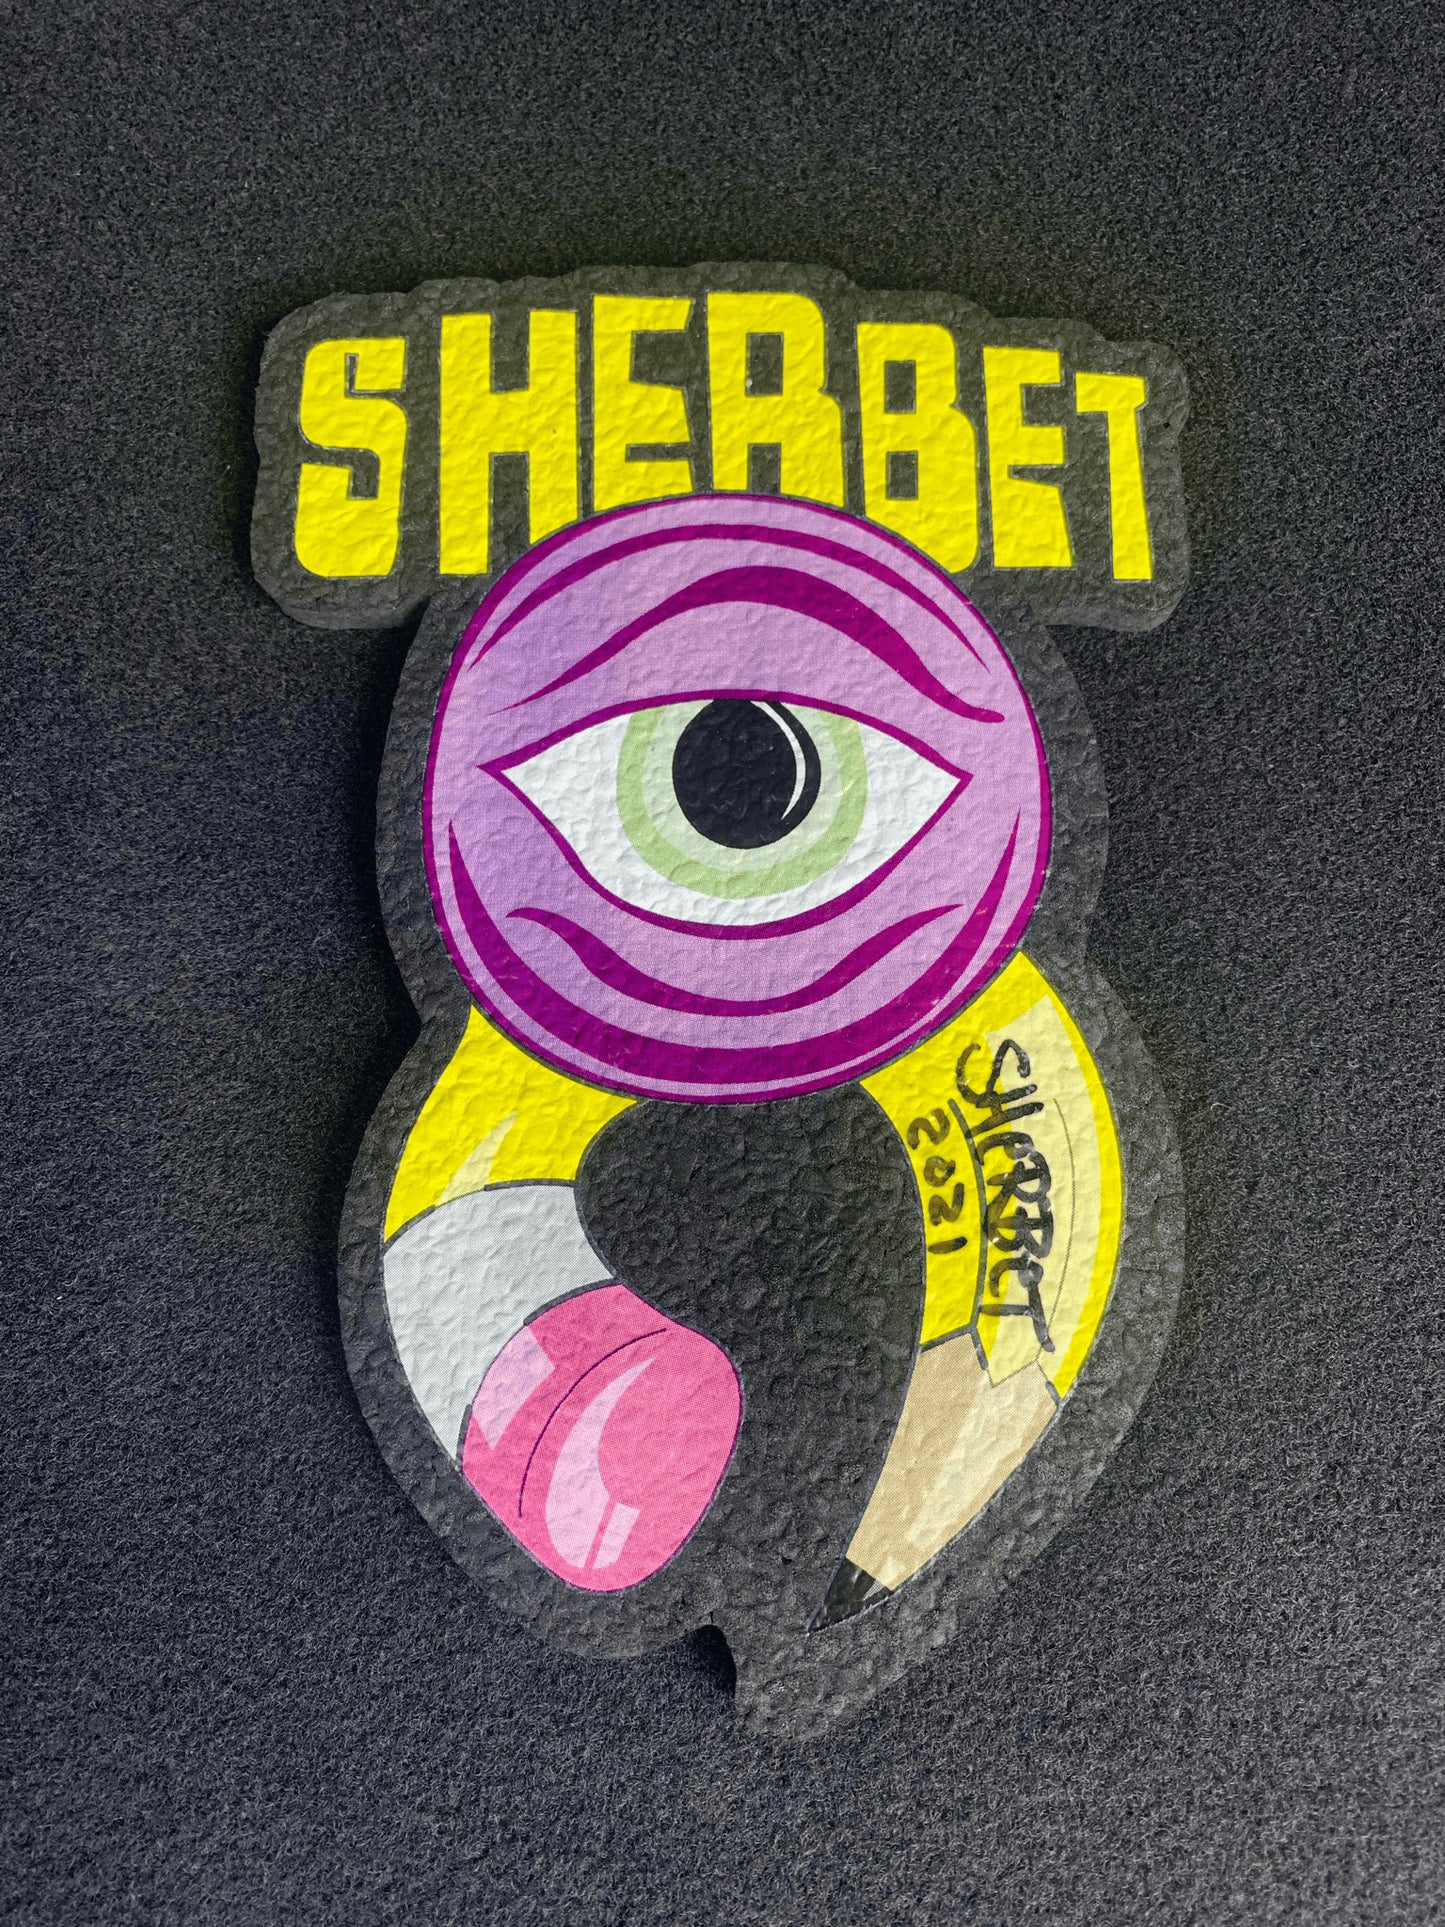 exquisite art piece - Purple Eye Moodmat by Sherbet Glass